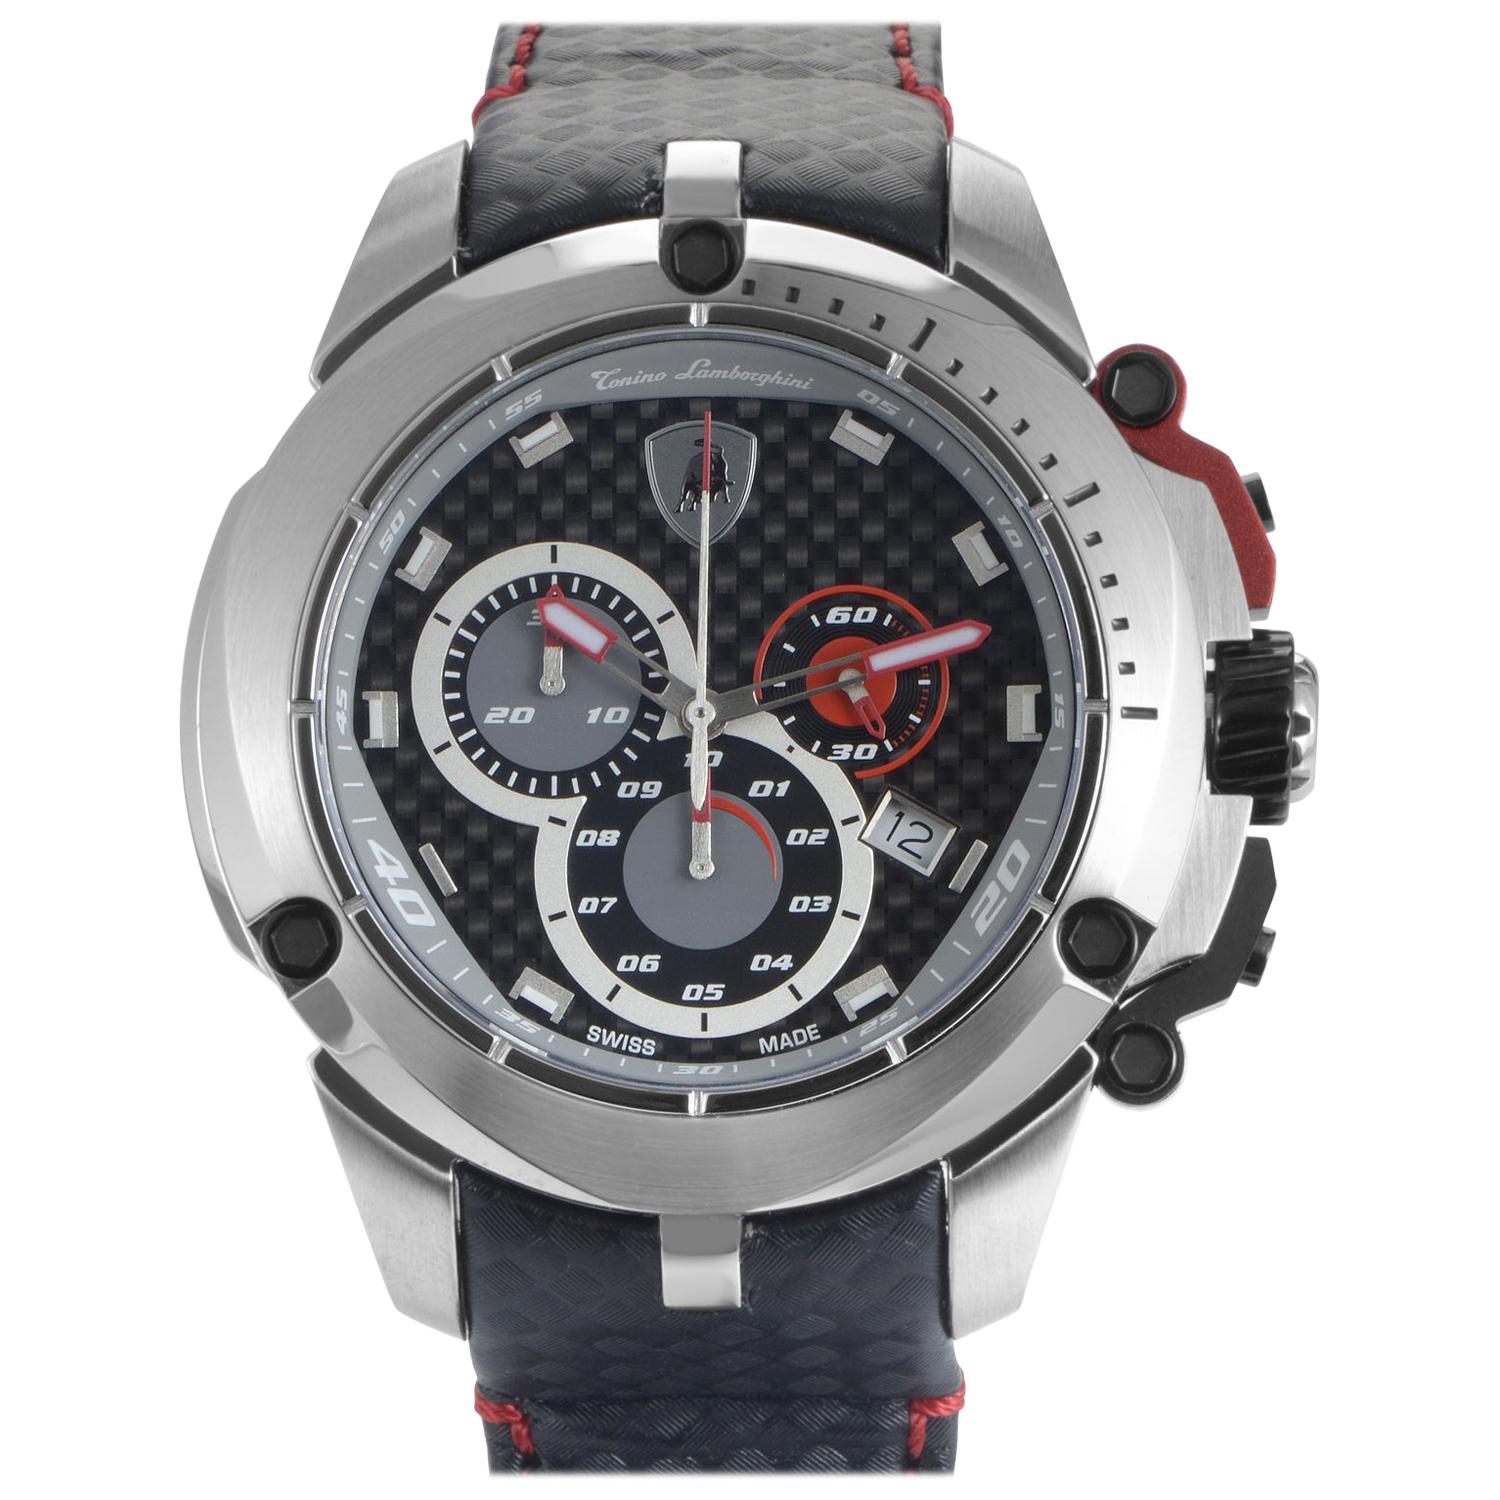 Tonino Lamborghini Shield Series Quartz Chronograph Watch 7801